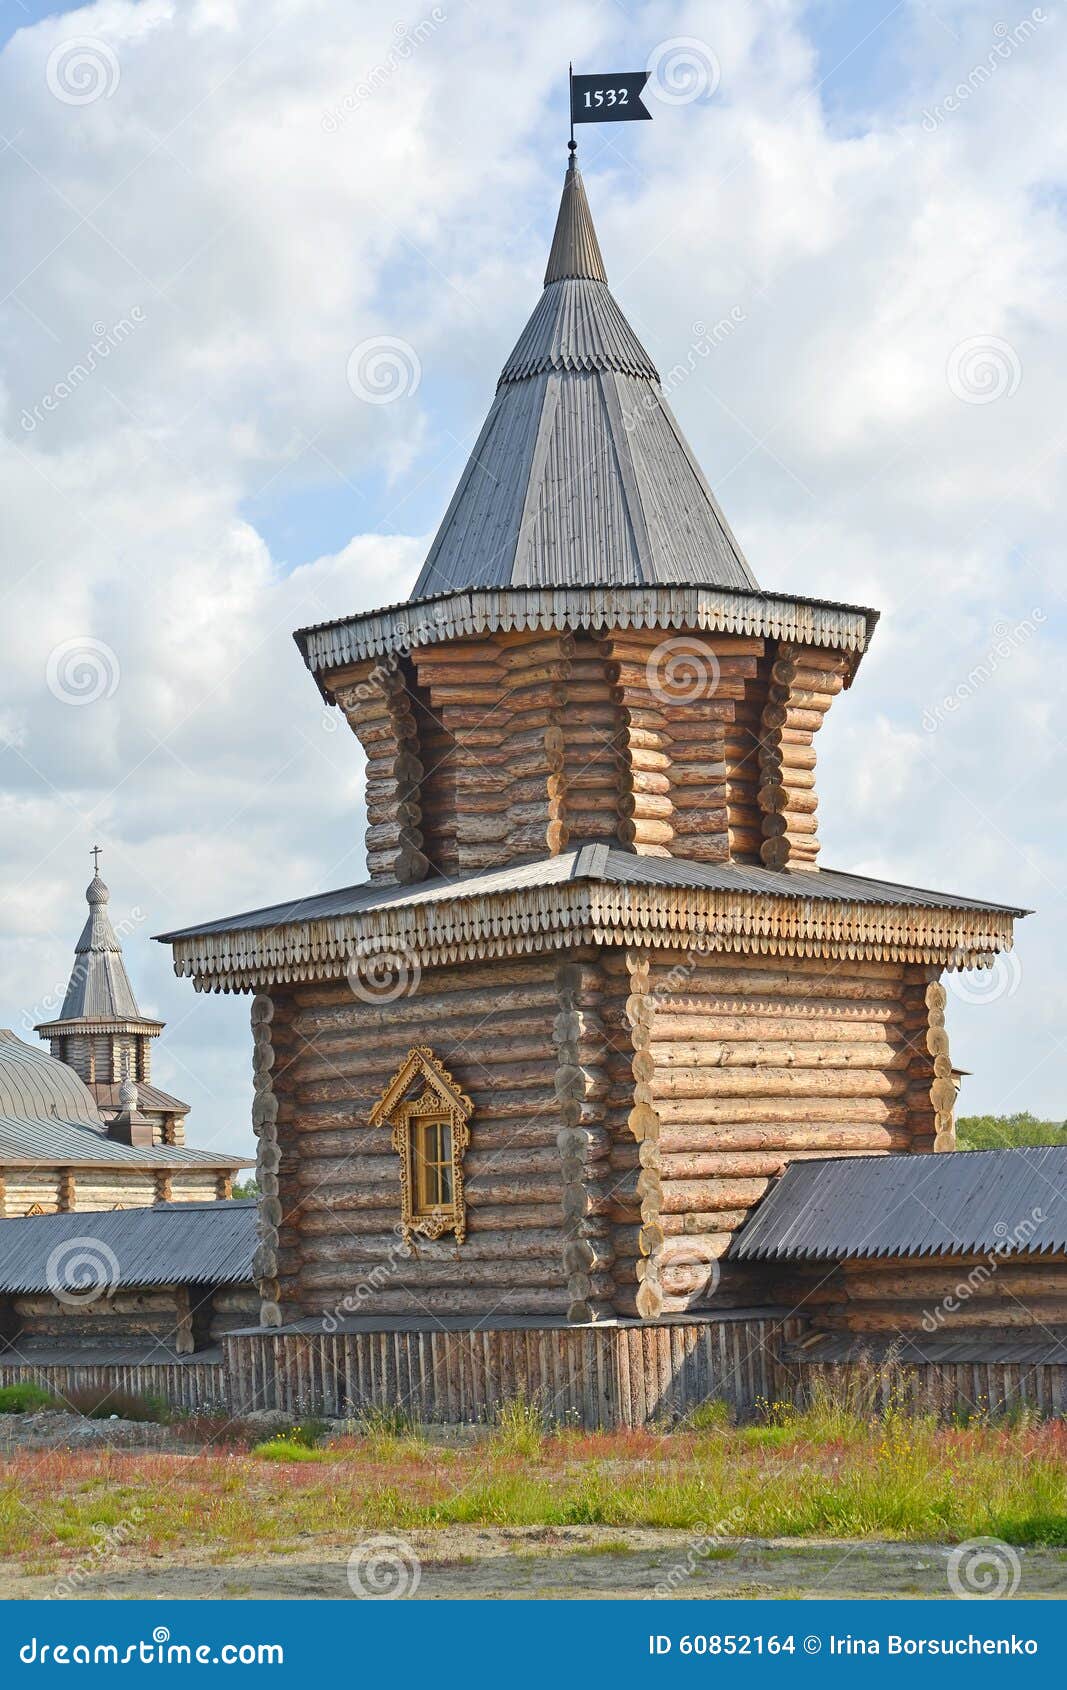 serf tower of the sacred and troitsk trifonov-pechengsky man's monastery